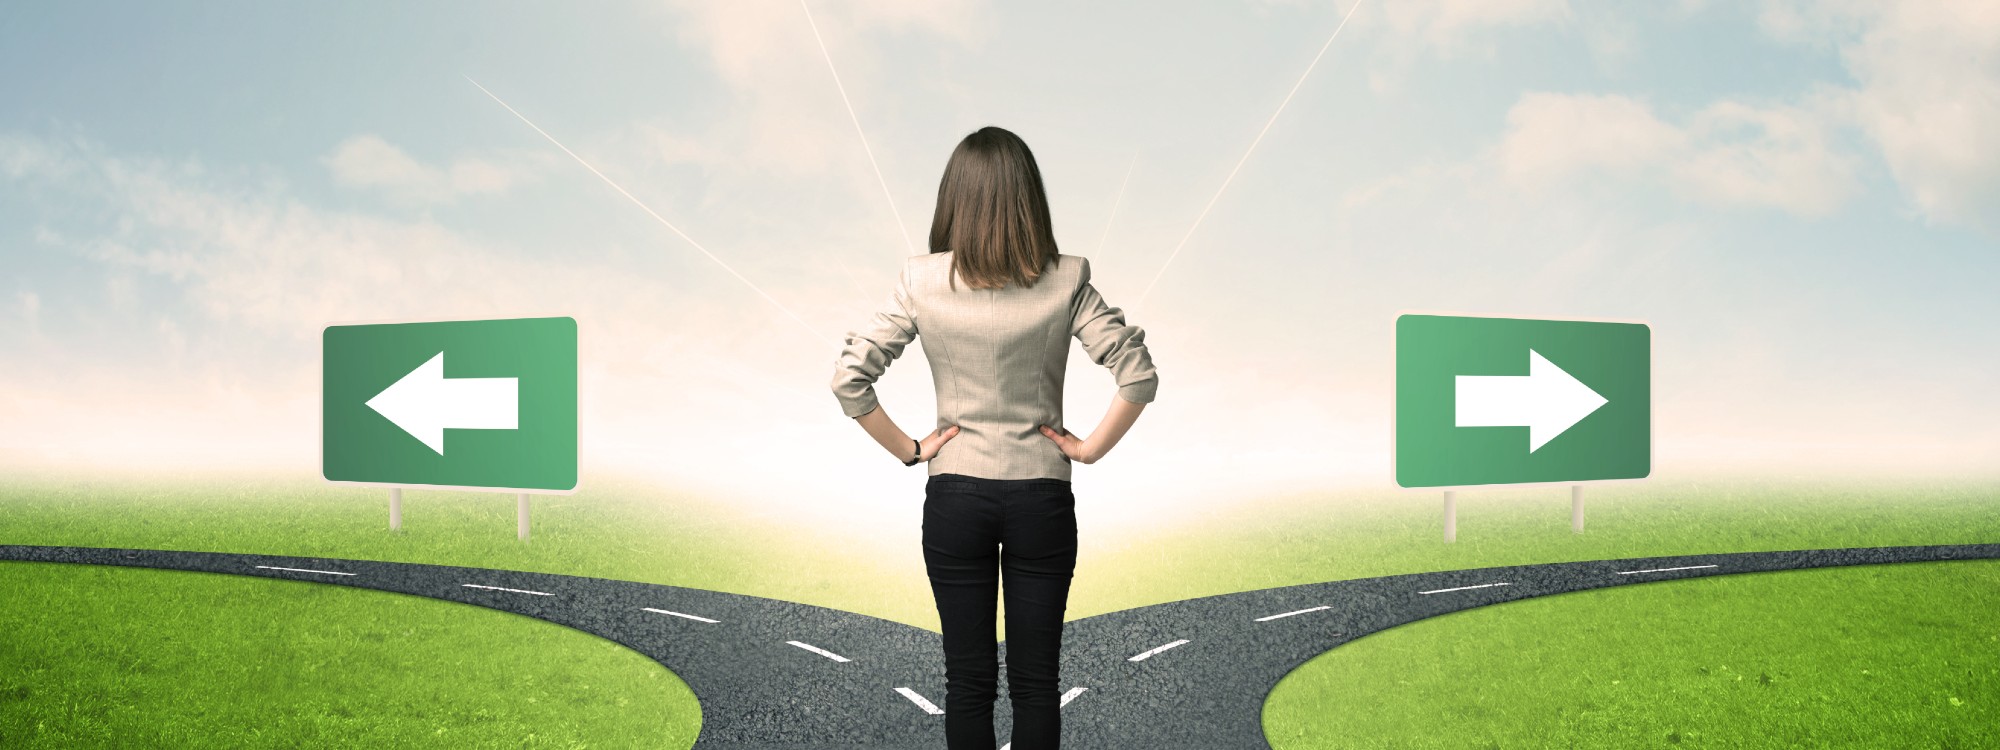 Woman choosing path on a road